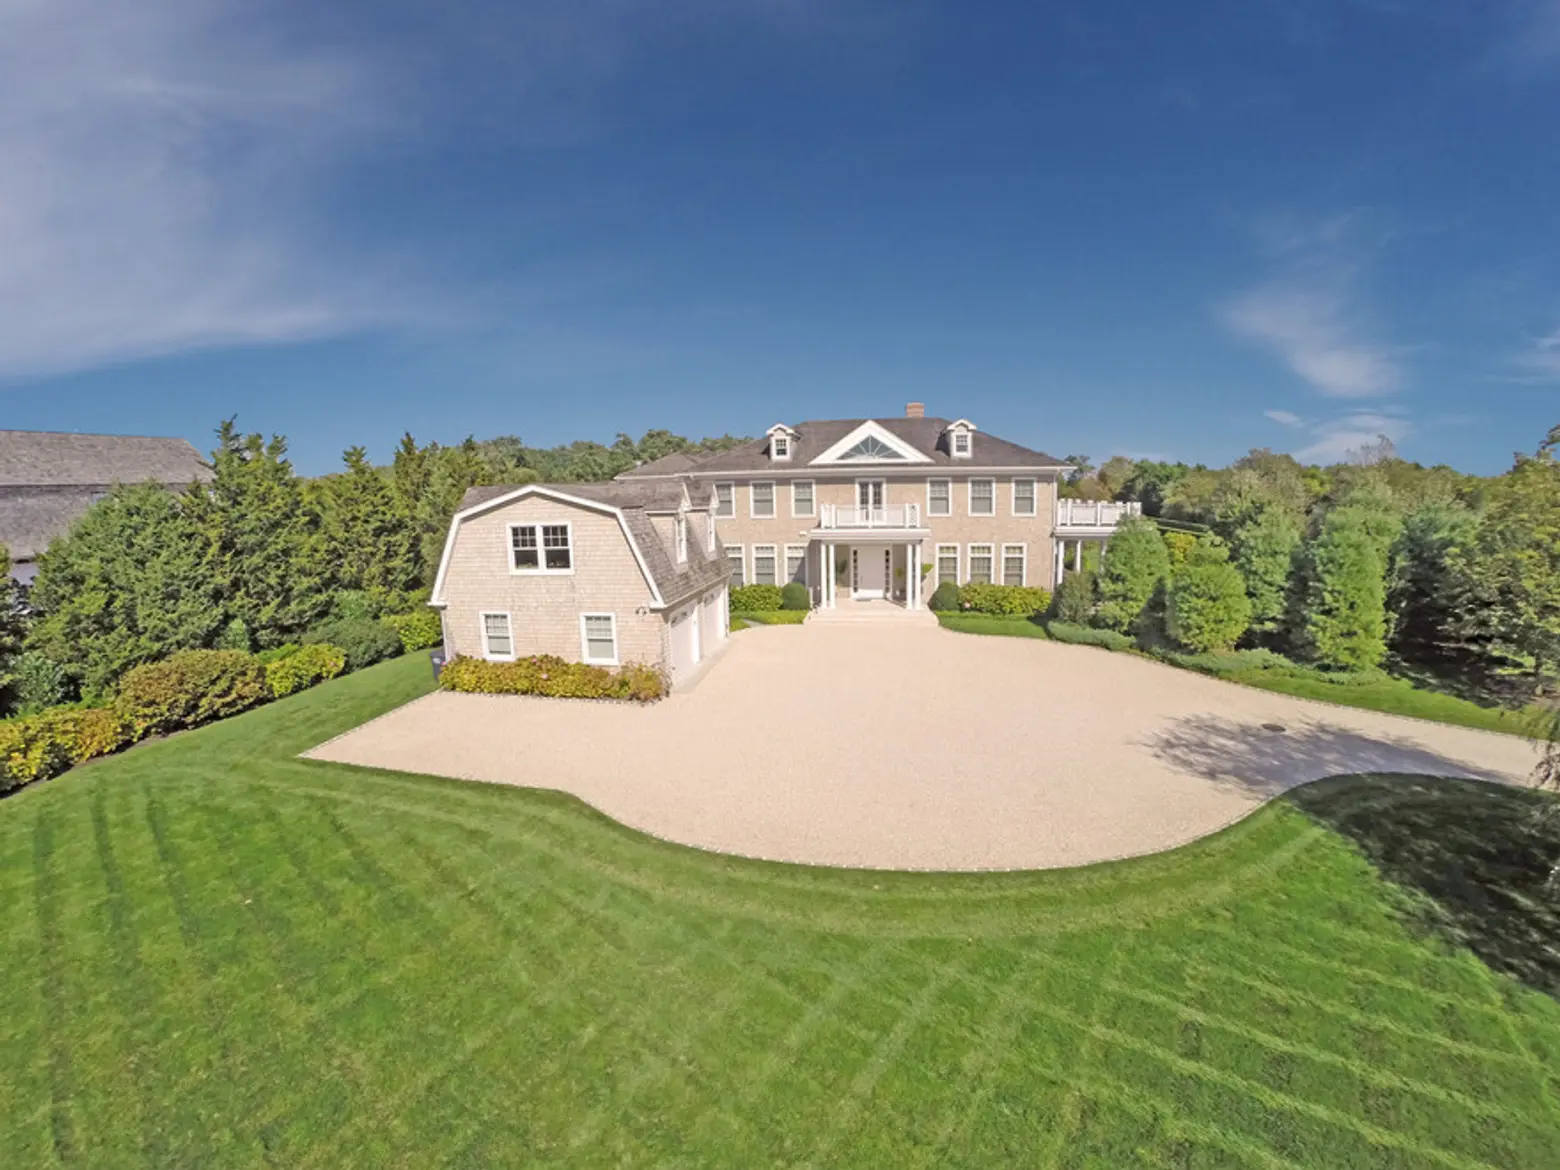 Jason Kidd Sells Hamptons Mansion for $7.1M